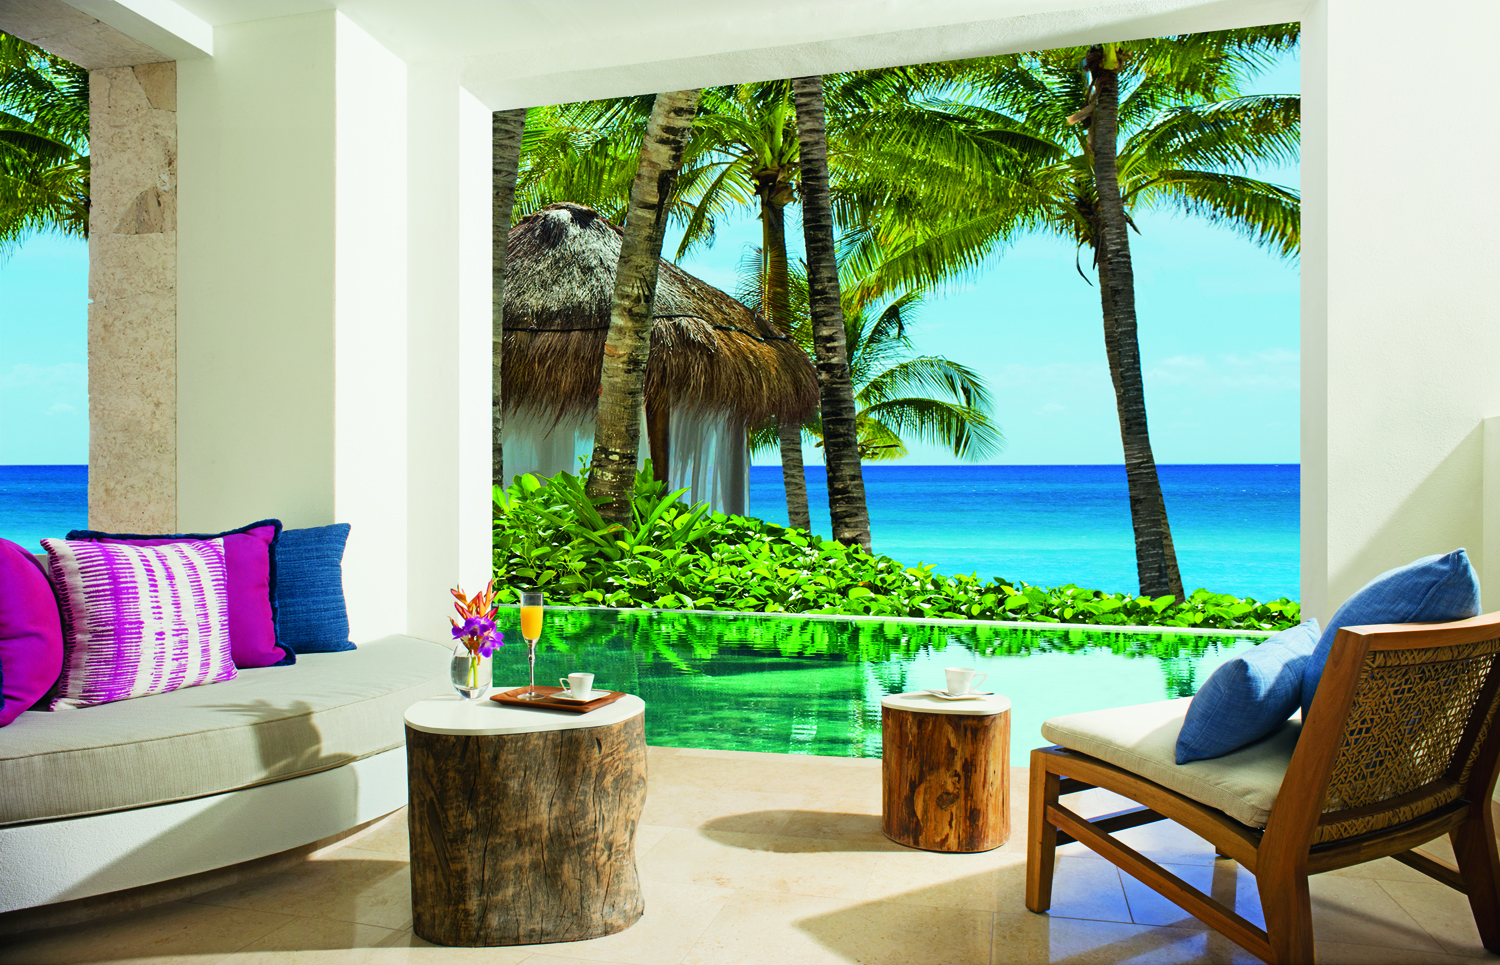 Preferred Club Bungalow Suite Swim Out Suite at Secrets Cap Cana Resort Spa in Punta Cana, Dominican Republic. 